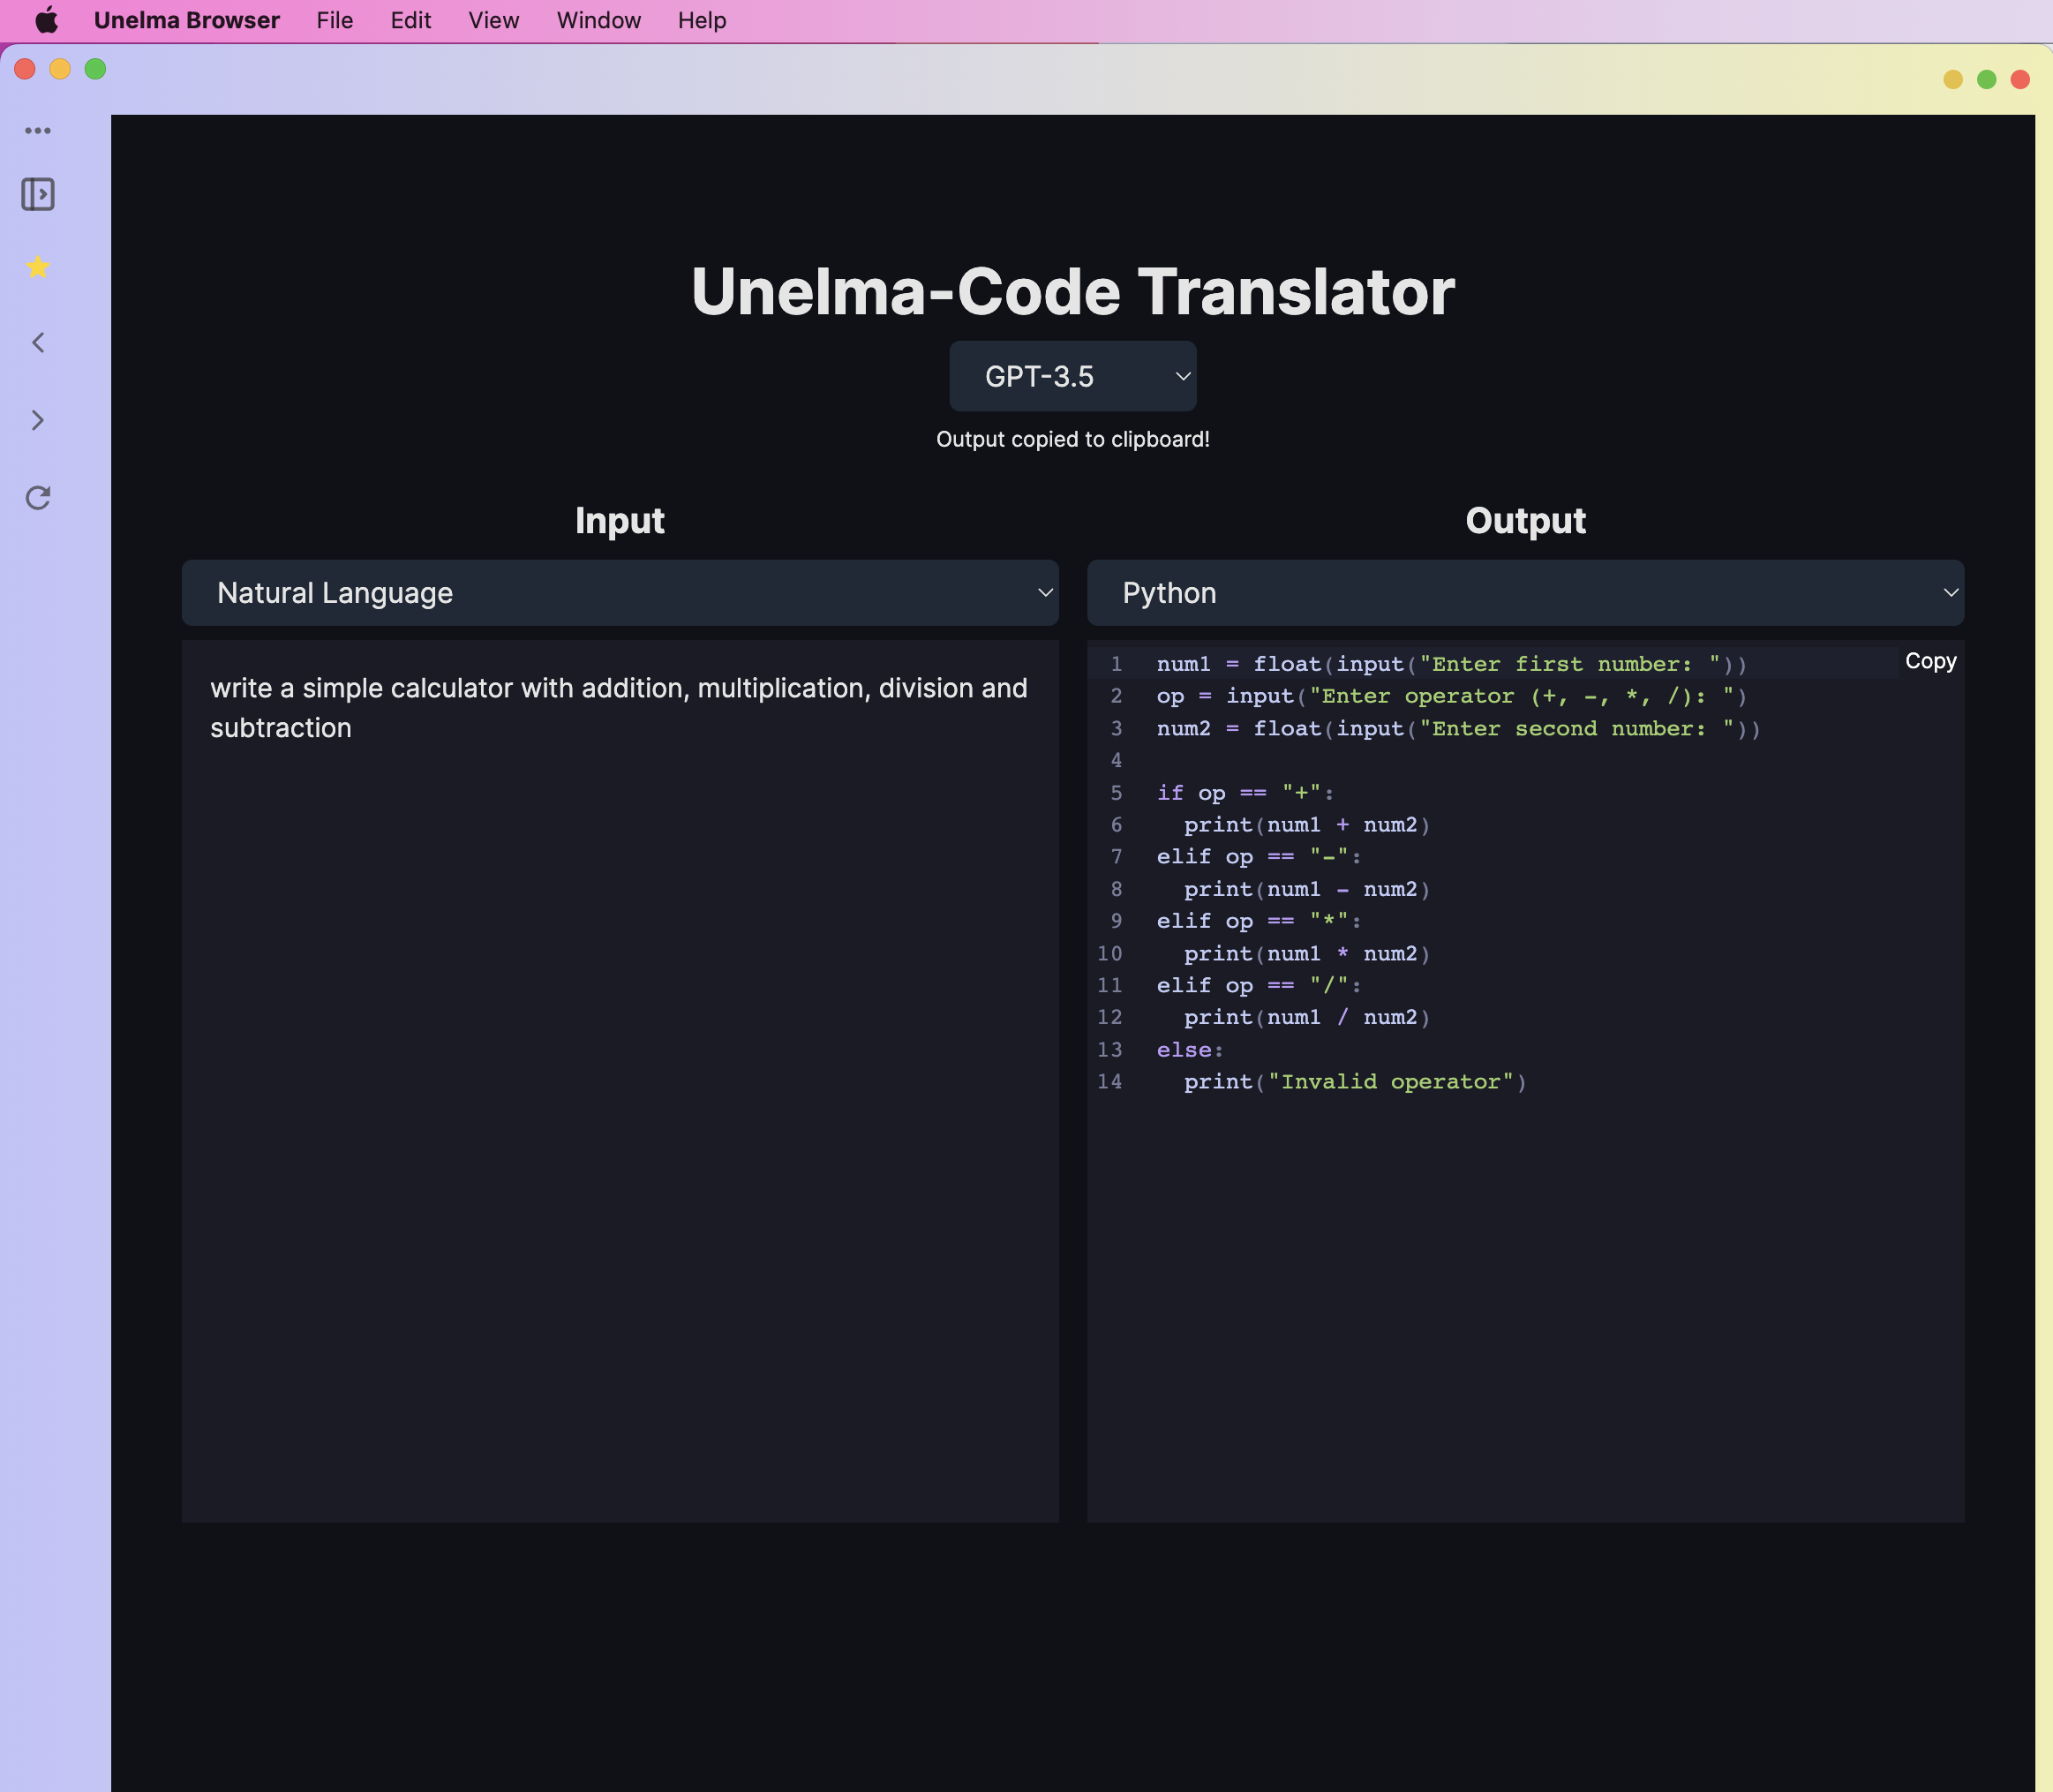 Unelma-Code Translator